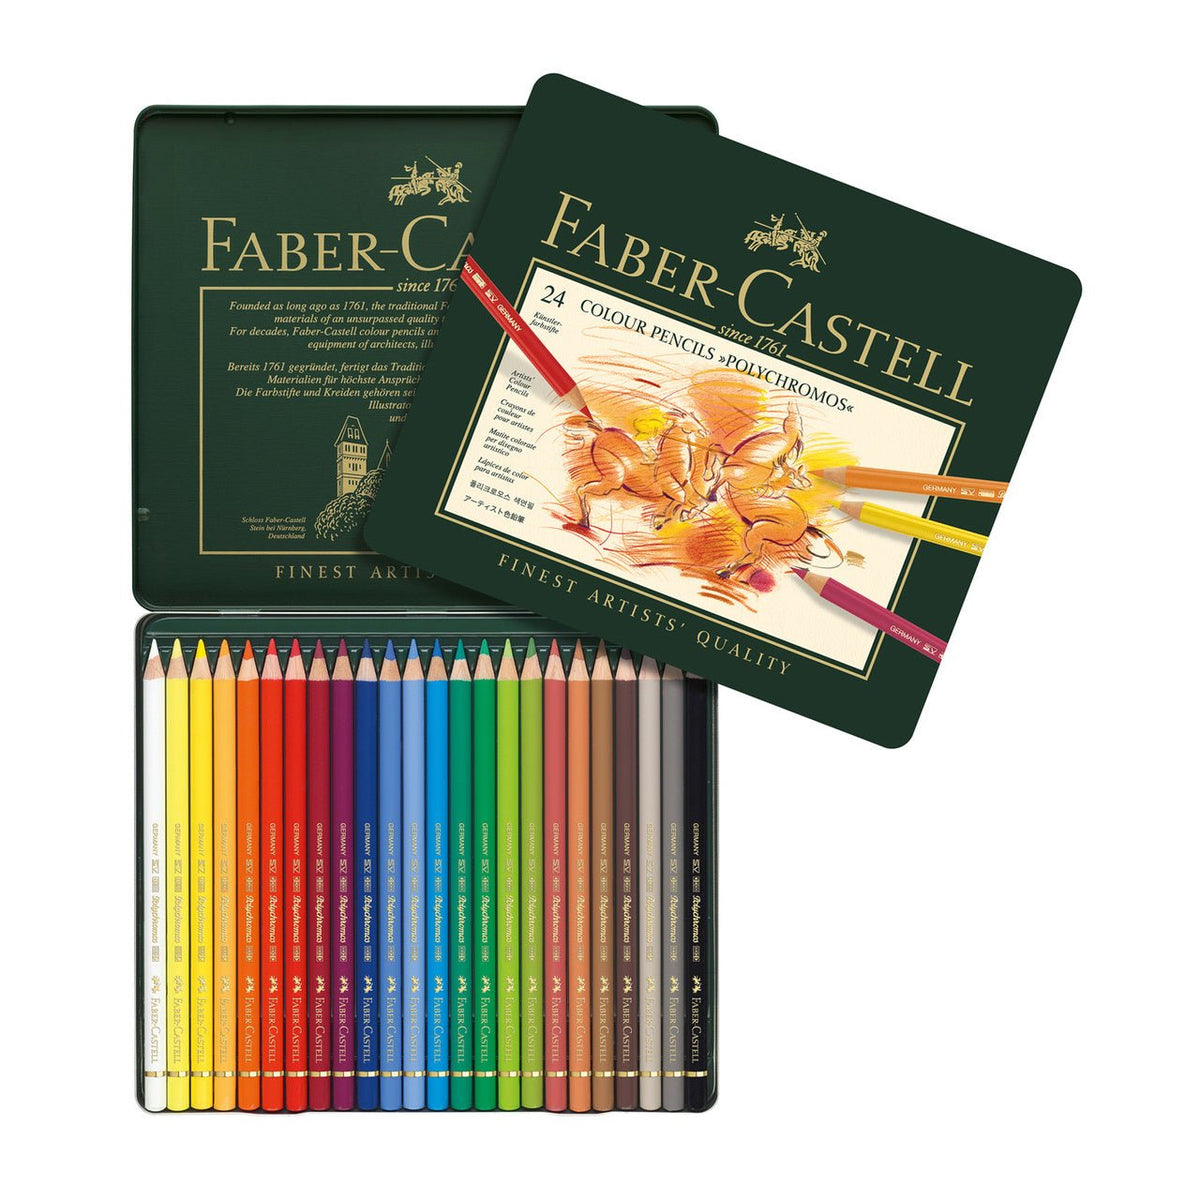 Faber-Castell Polychromos Artist Colored Pencil Set of 24 